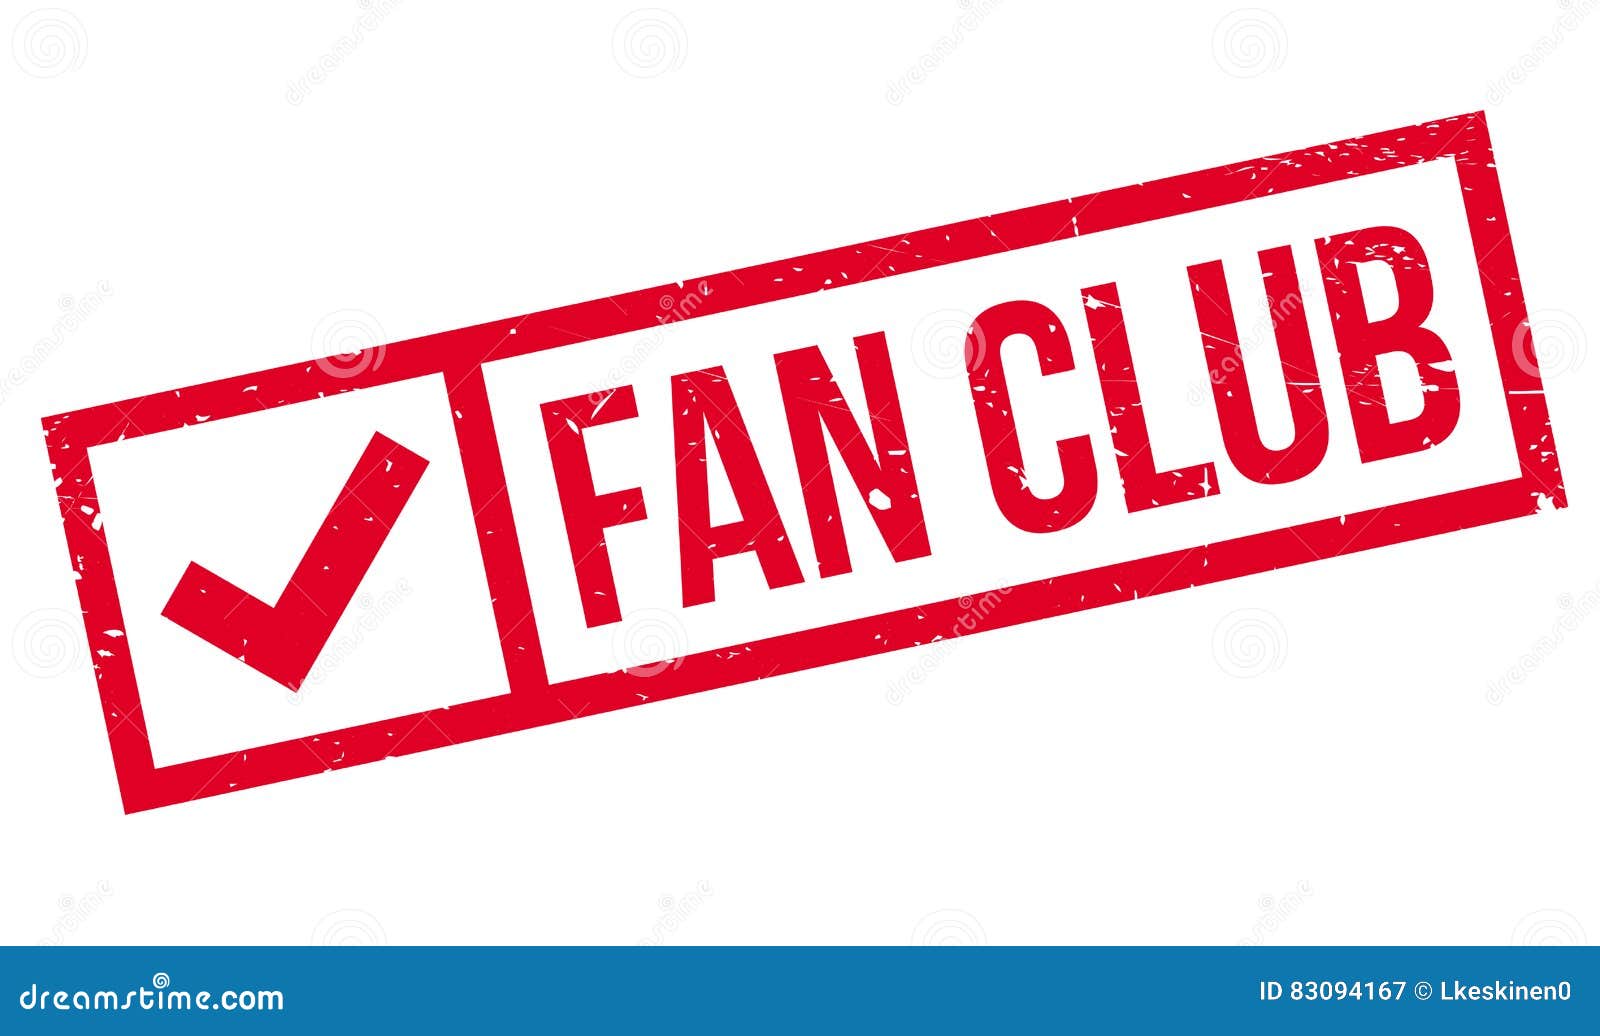 Fan club Stock Photos, Royalty Free Fan club Images